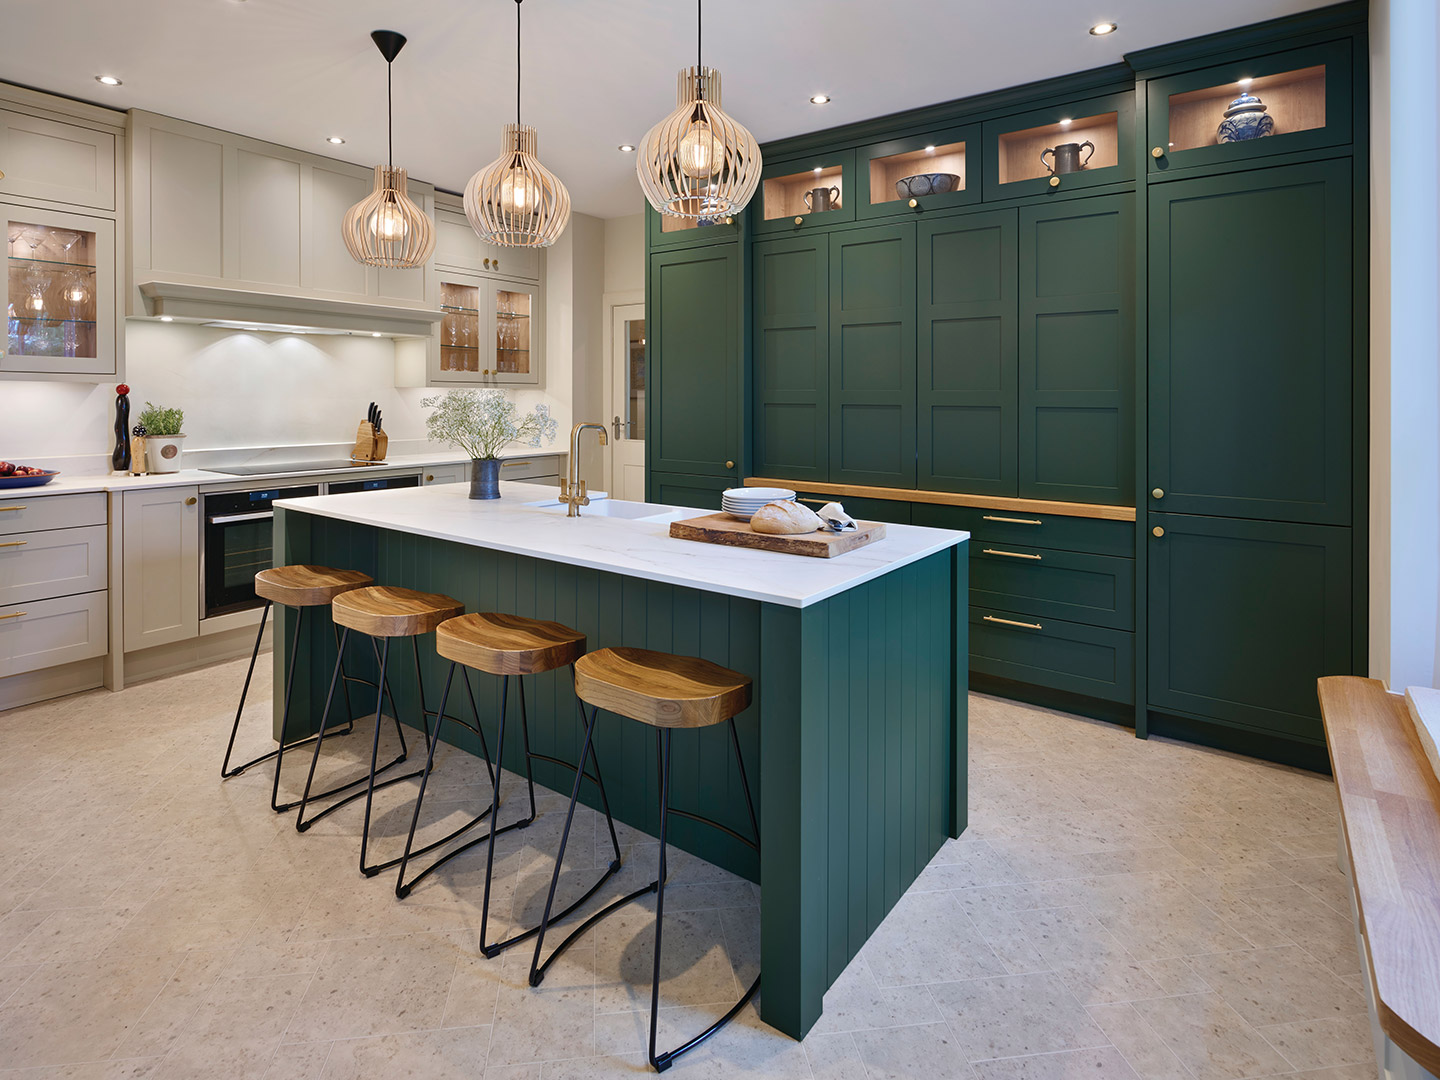 Green kitchen cupboards paired with white marble worktop featured in Callerton kitchen design